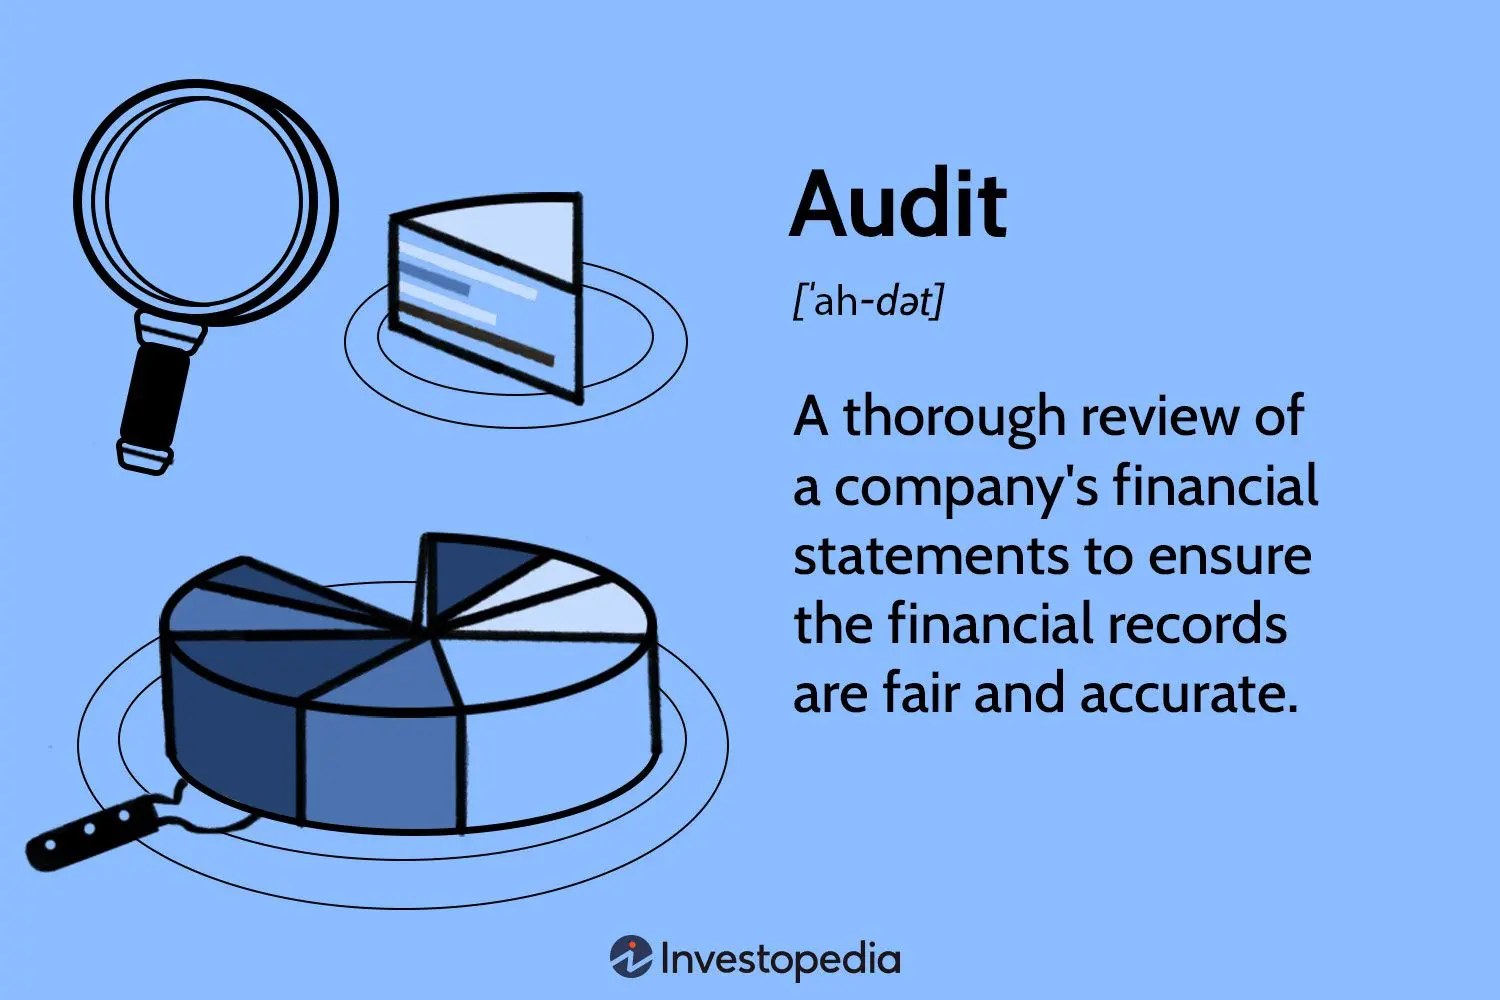 auditor معنى - ما معنى كلمة Audit باللغة العربية؟